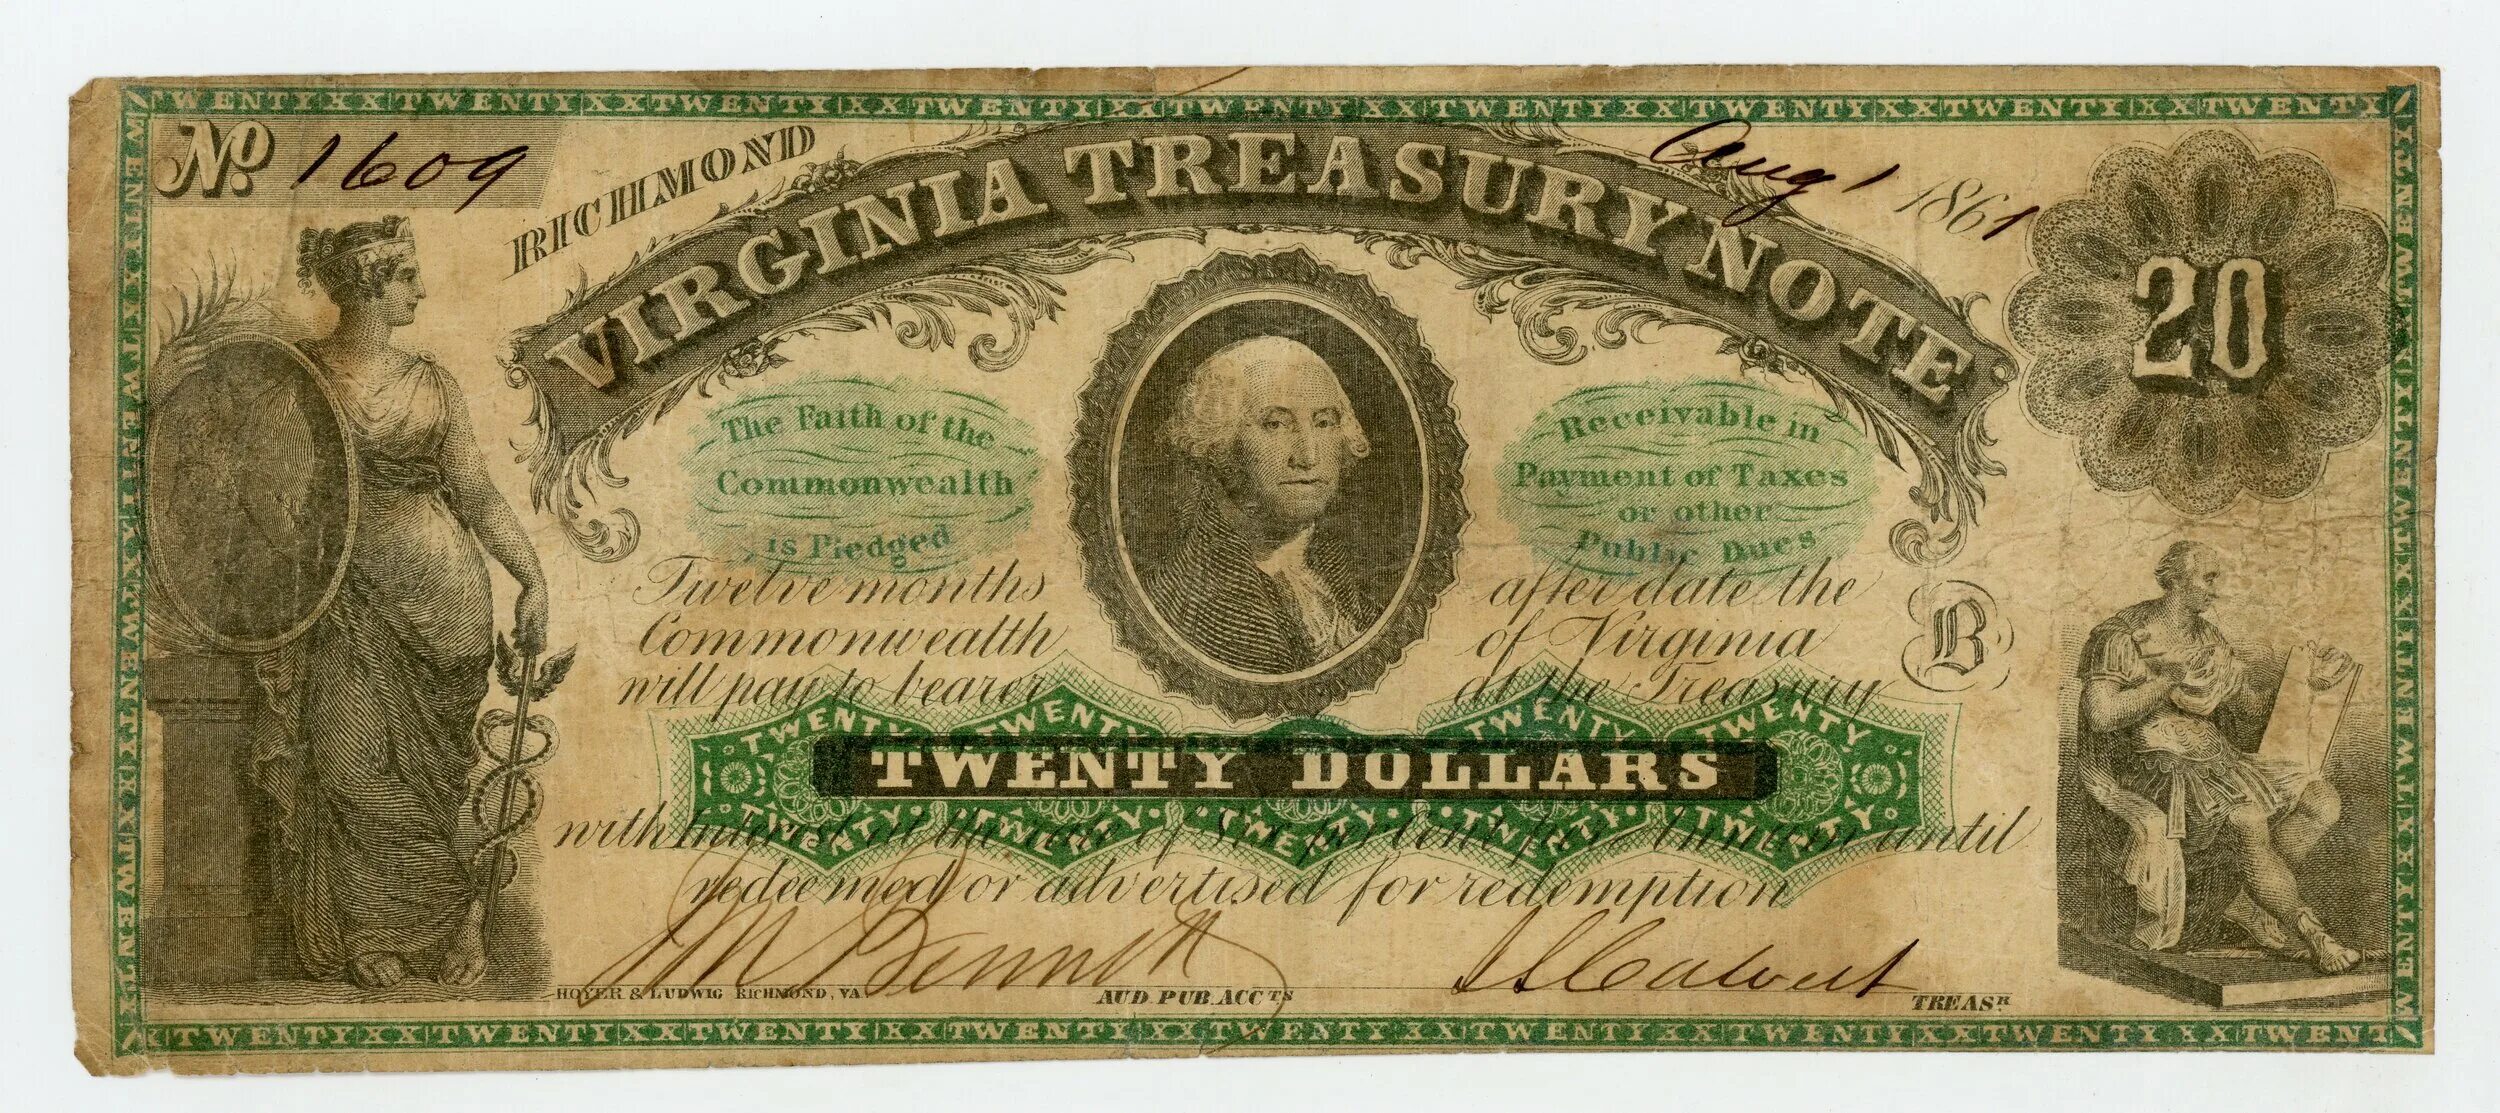 0 3 доллара. Доллары Конфедерации. Доллары конфедераций США. Деньги Конфедерации. Доллар 1861 года.